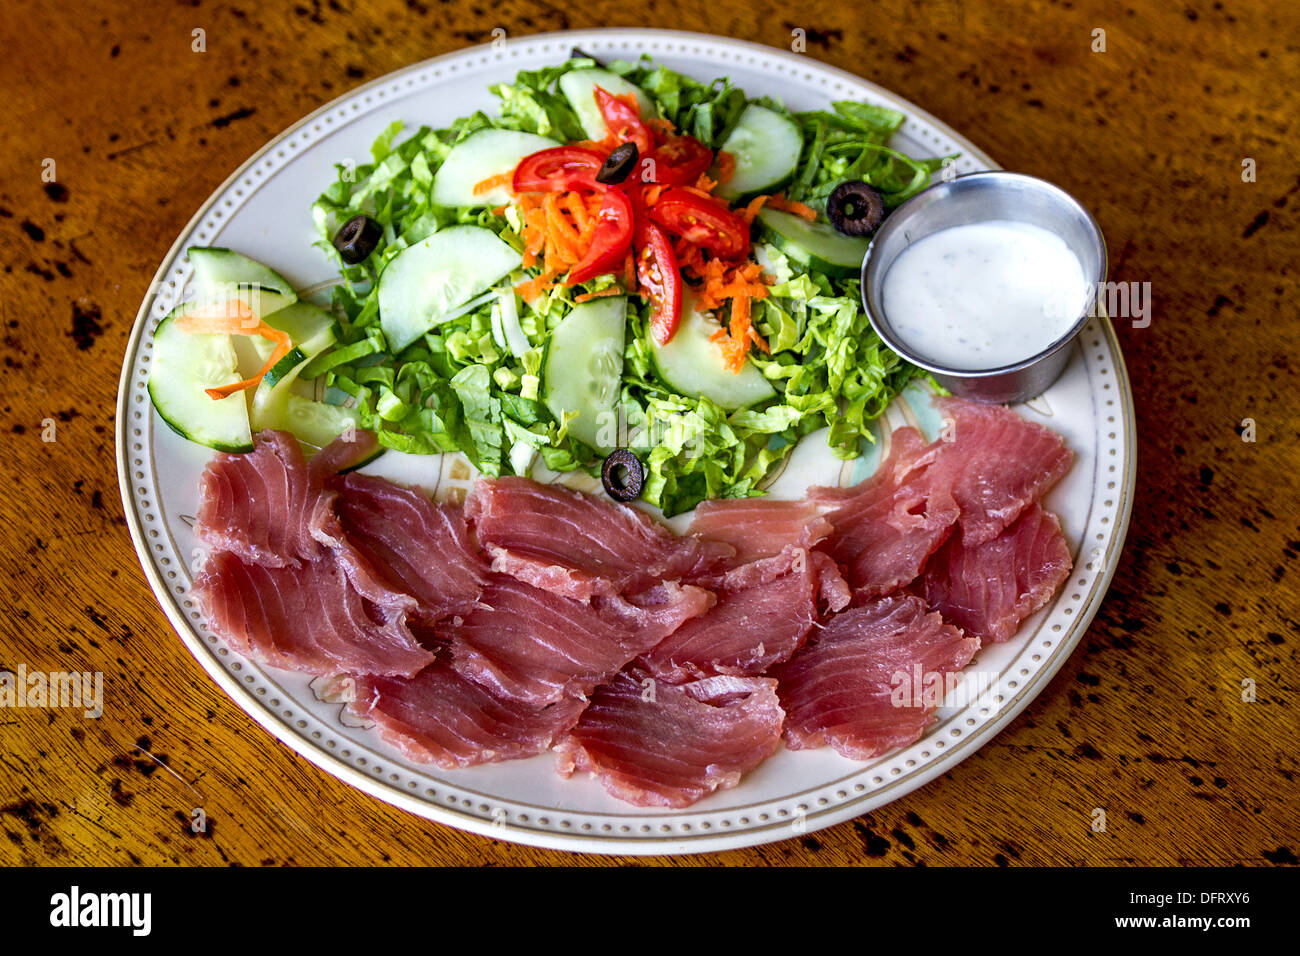 Yellowfin tuna sashimi, fresh raw fish served with a green salad. Stock Photo